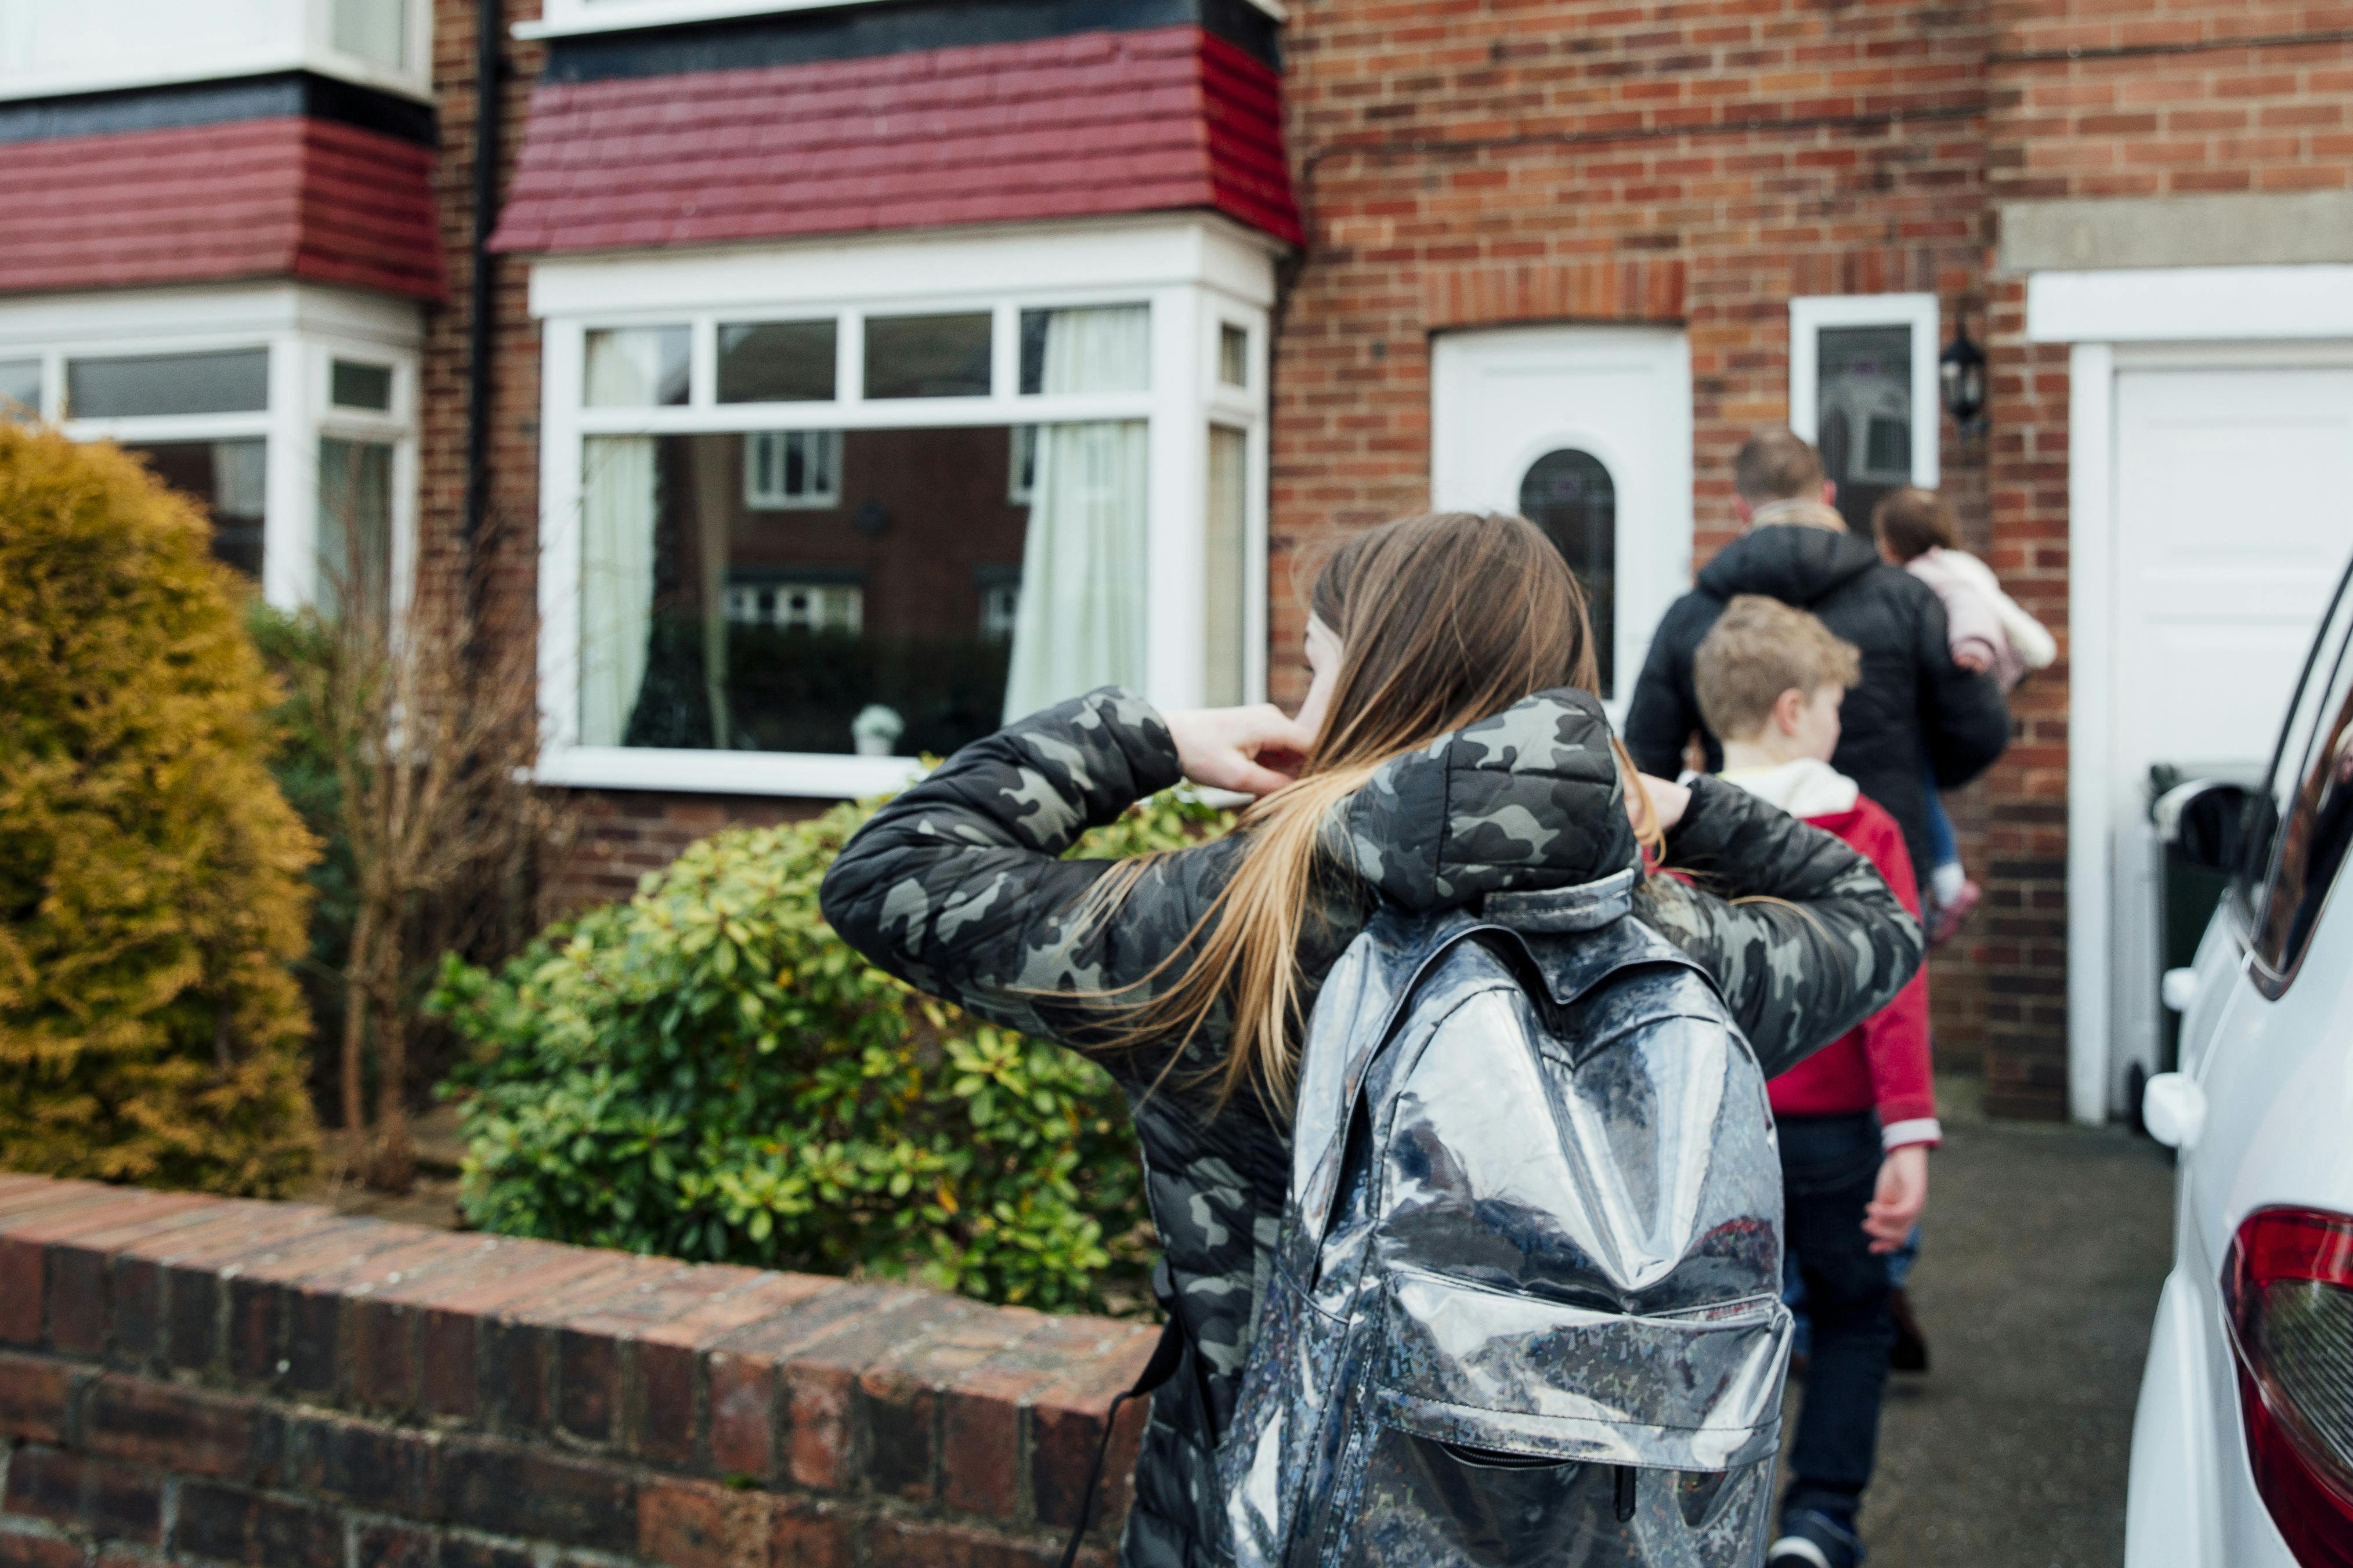 Children arriving home from school